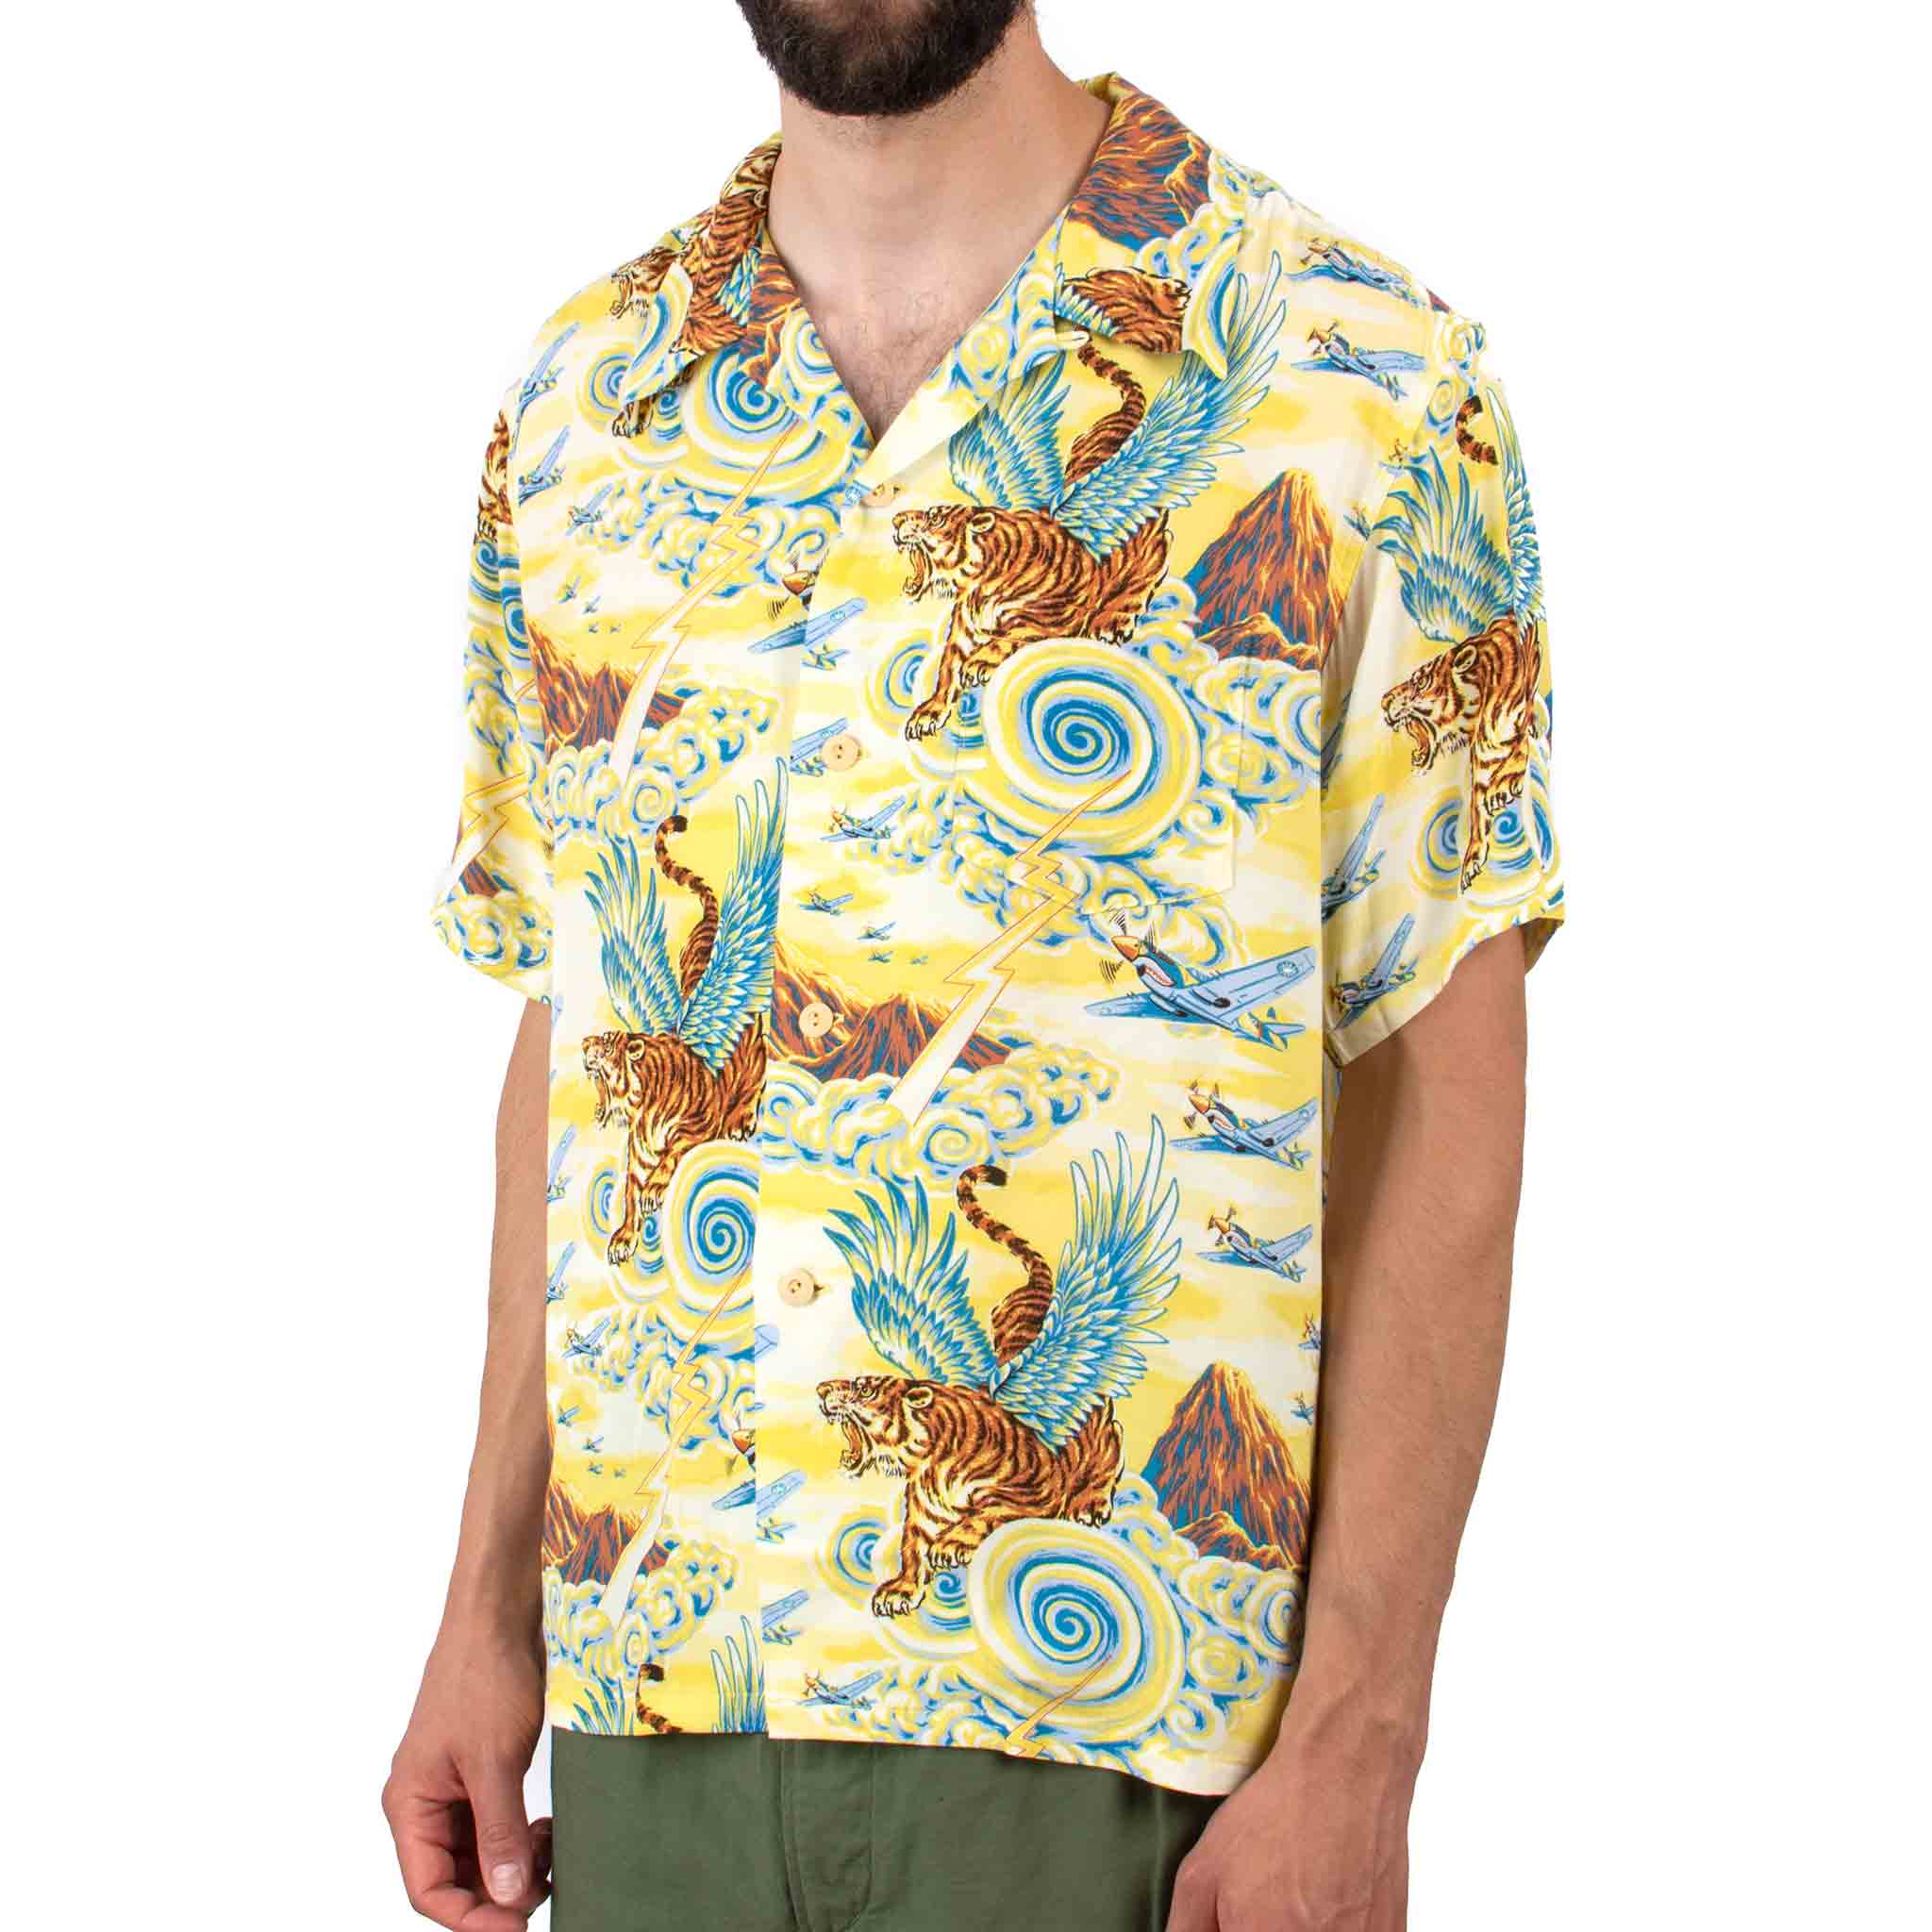 The Real McCoy's MS21001 Rayon Hawaiian Shirt / Flying Tigers Yellow Close